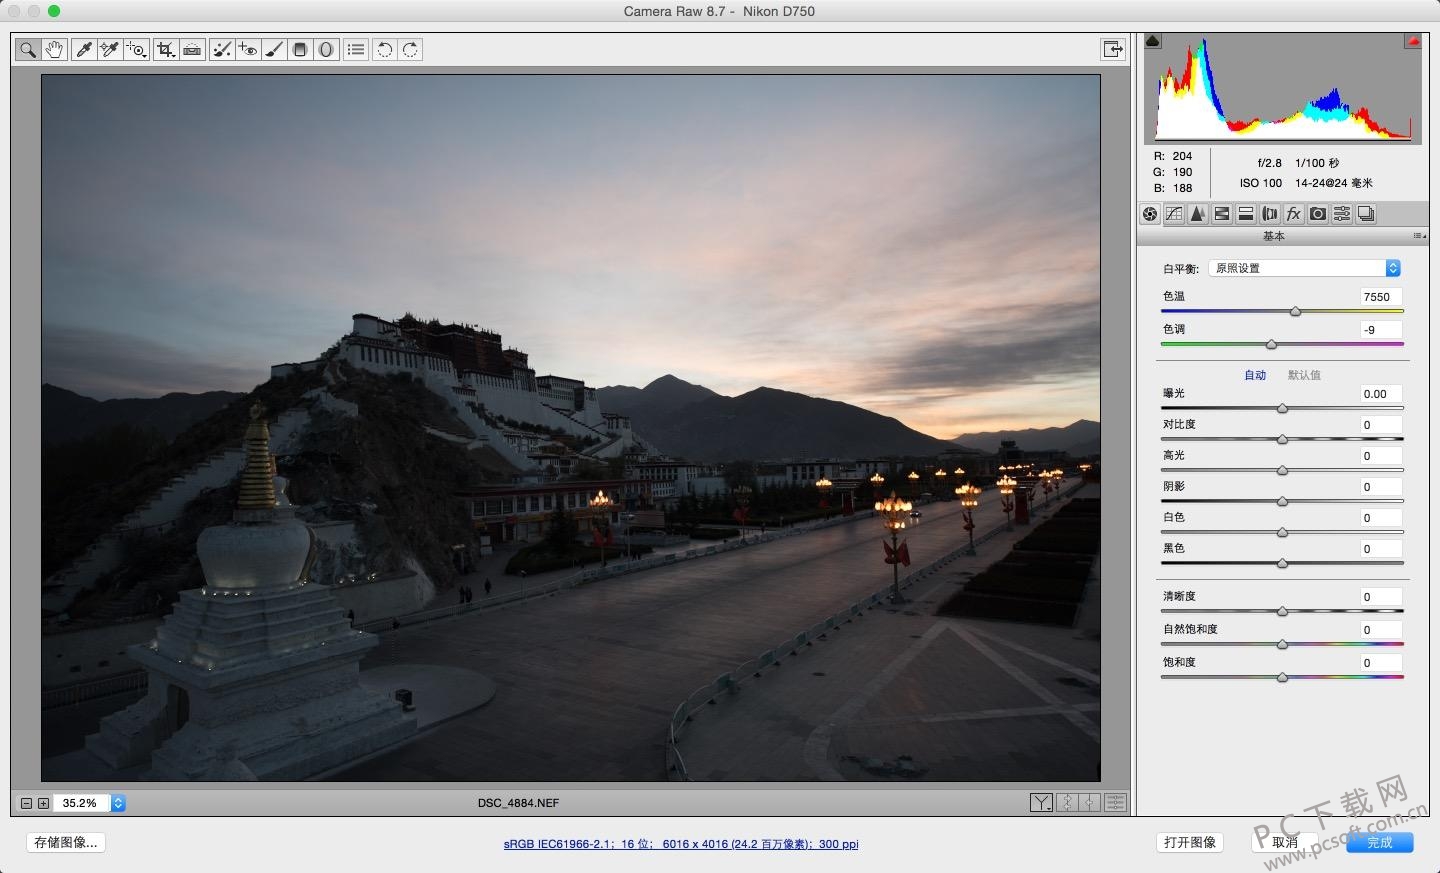 Adobe Camera Raw 16.0 download the new version